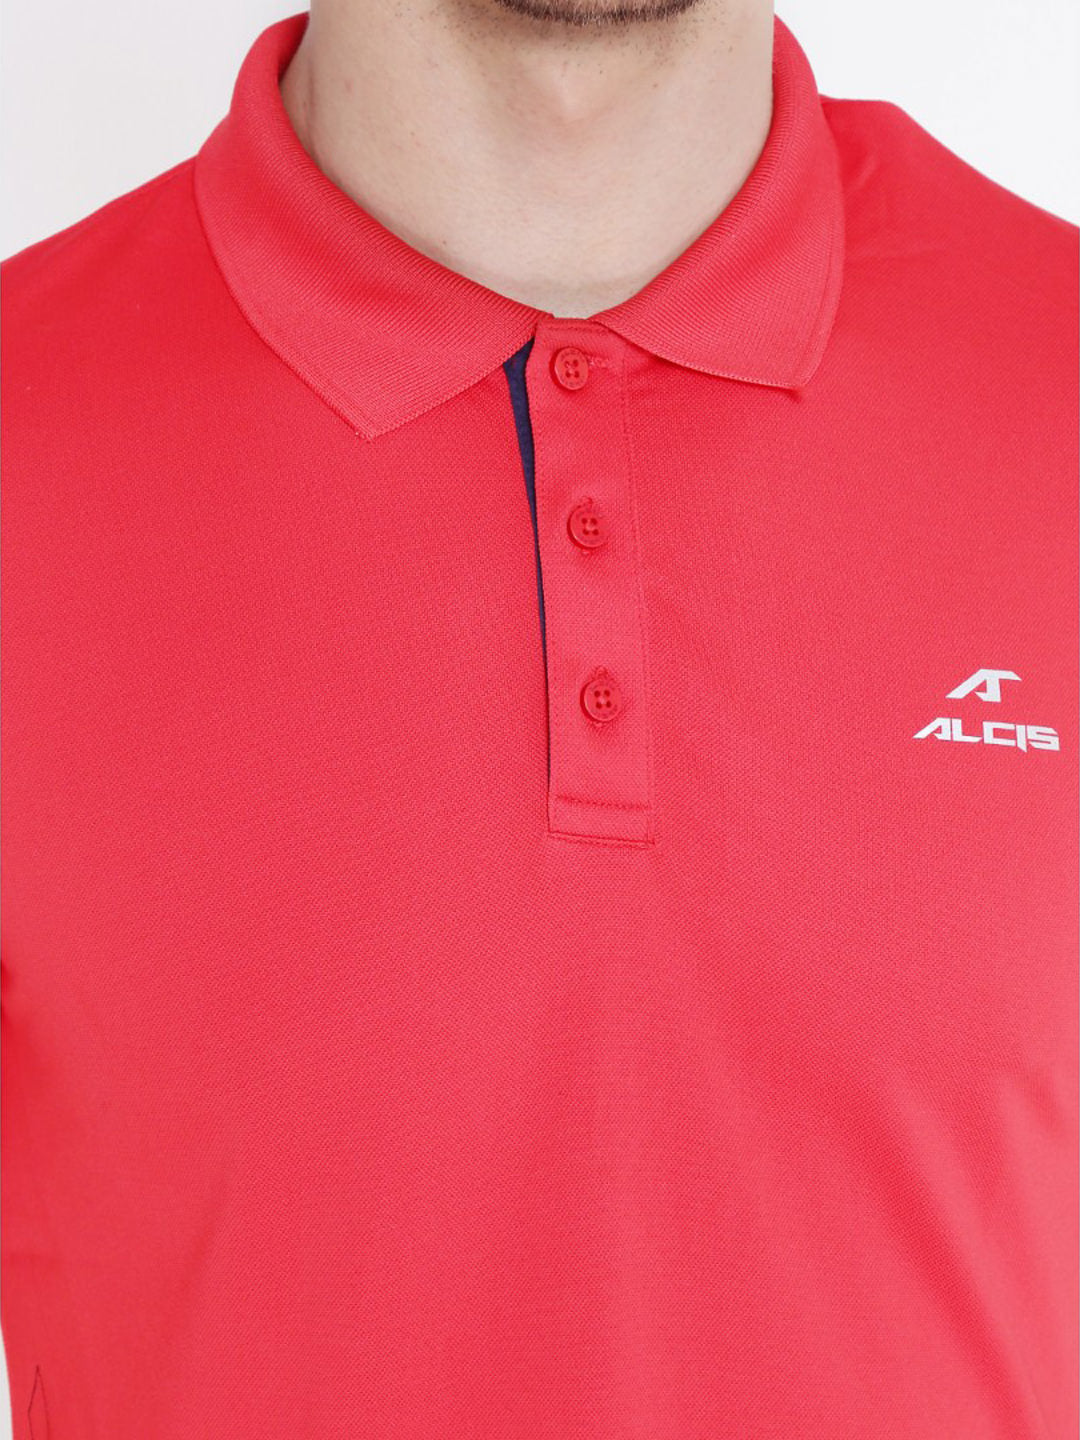 Alcis Men Red Running Polo T-Shirt